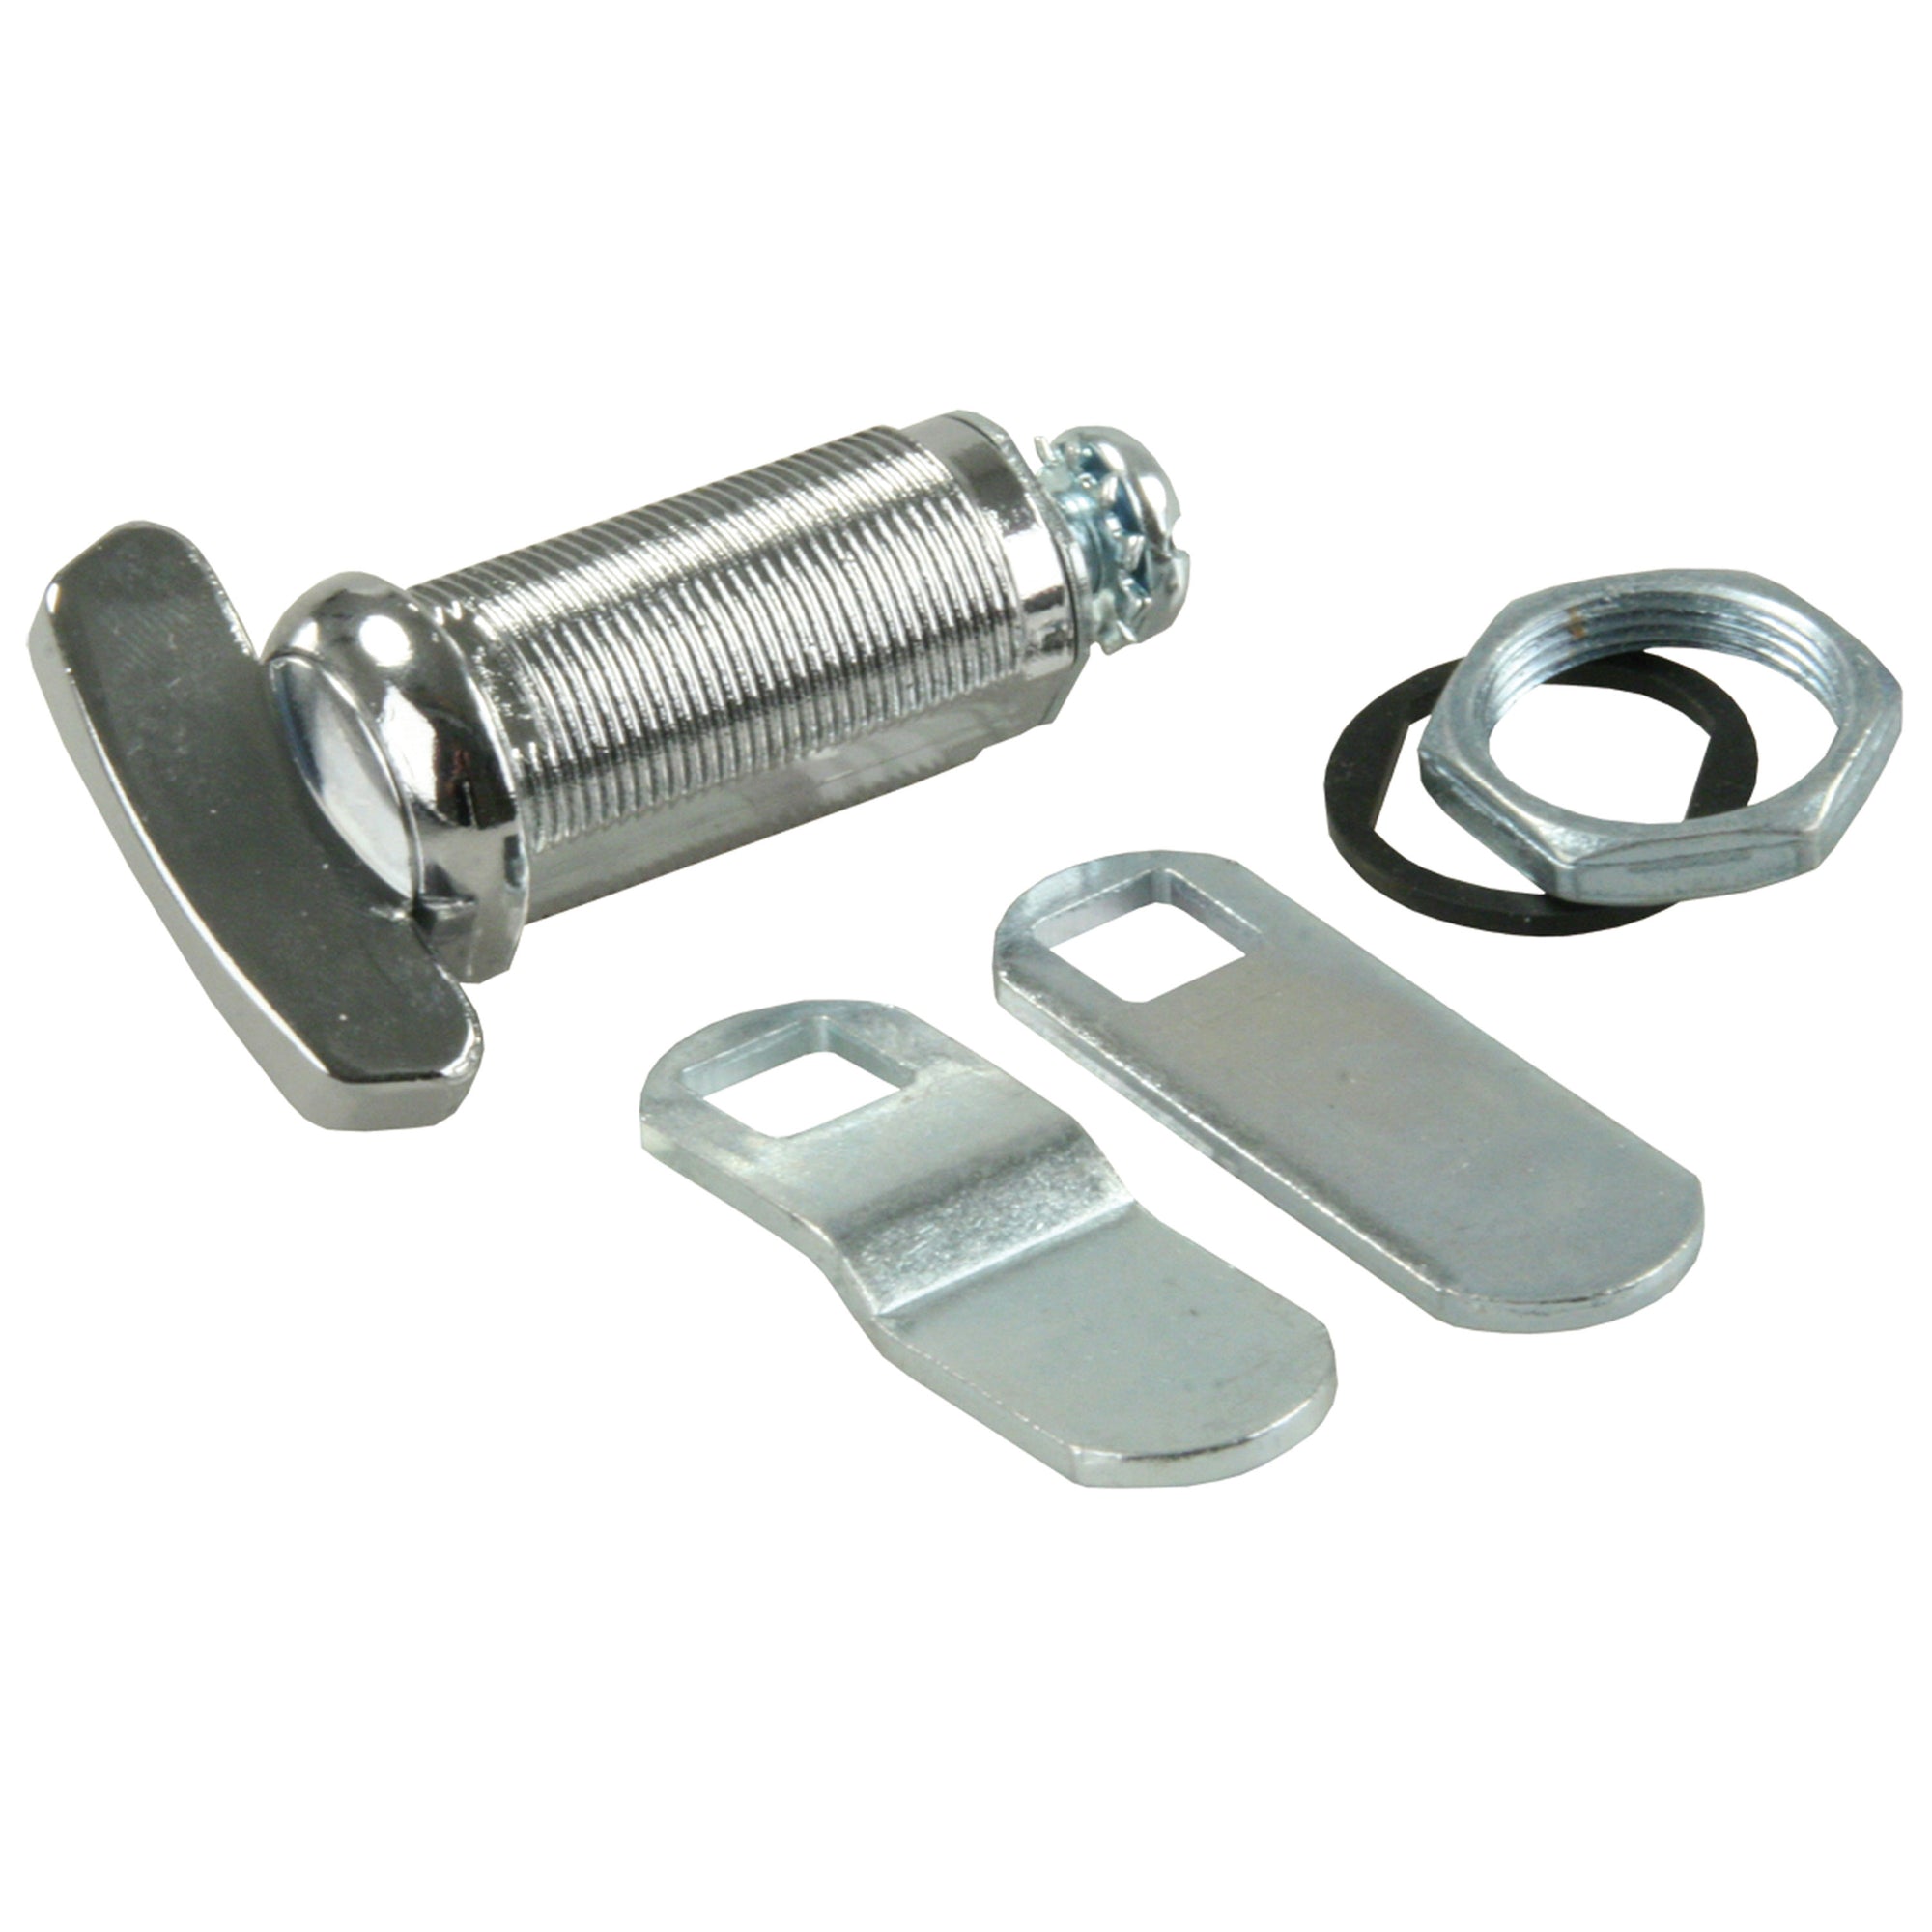 JR Products 00145 1 3/8" Thumb Compartment Lock